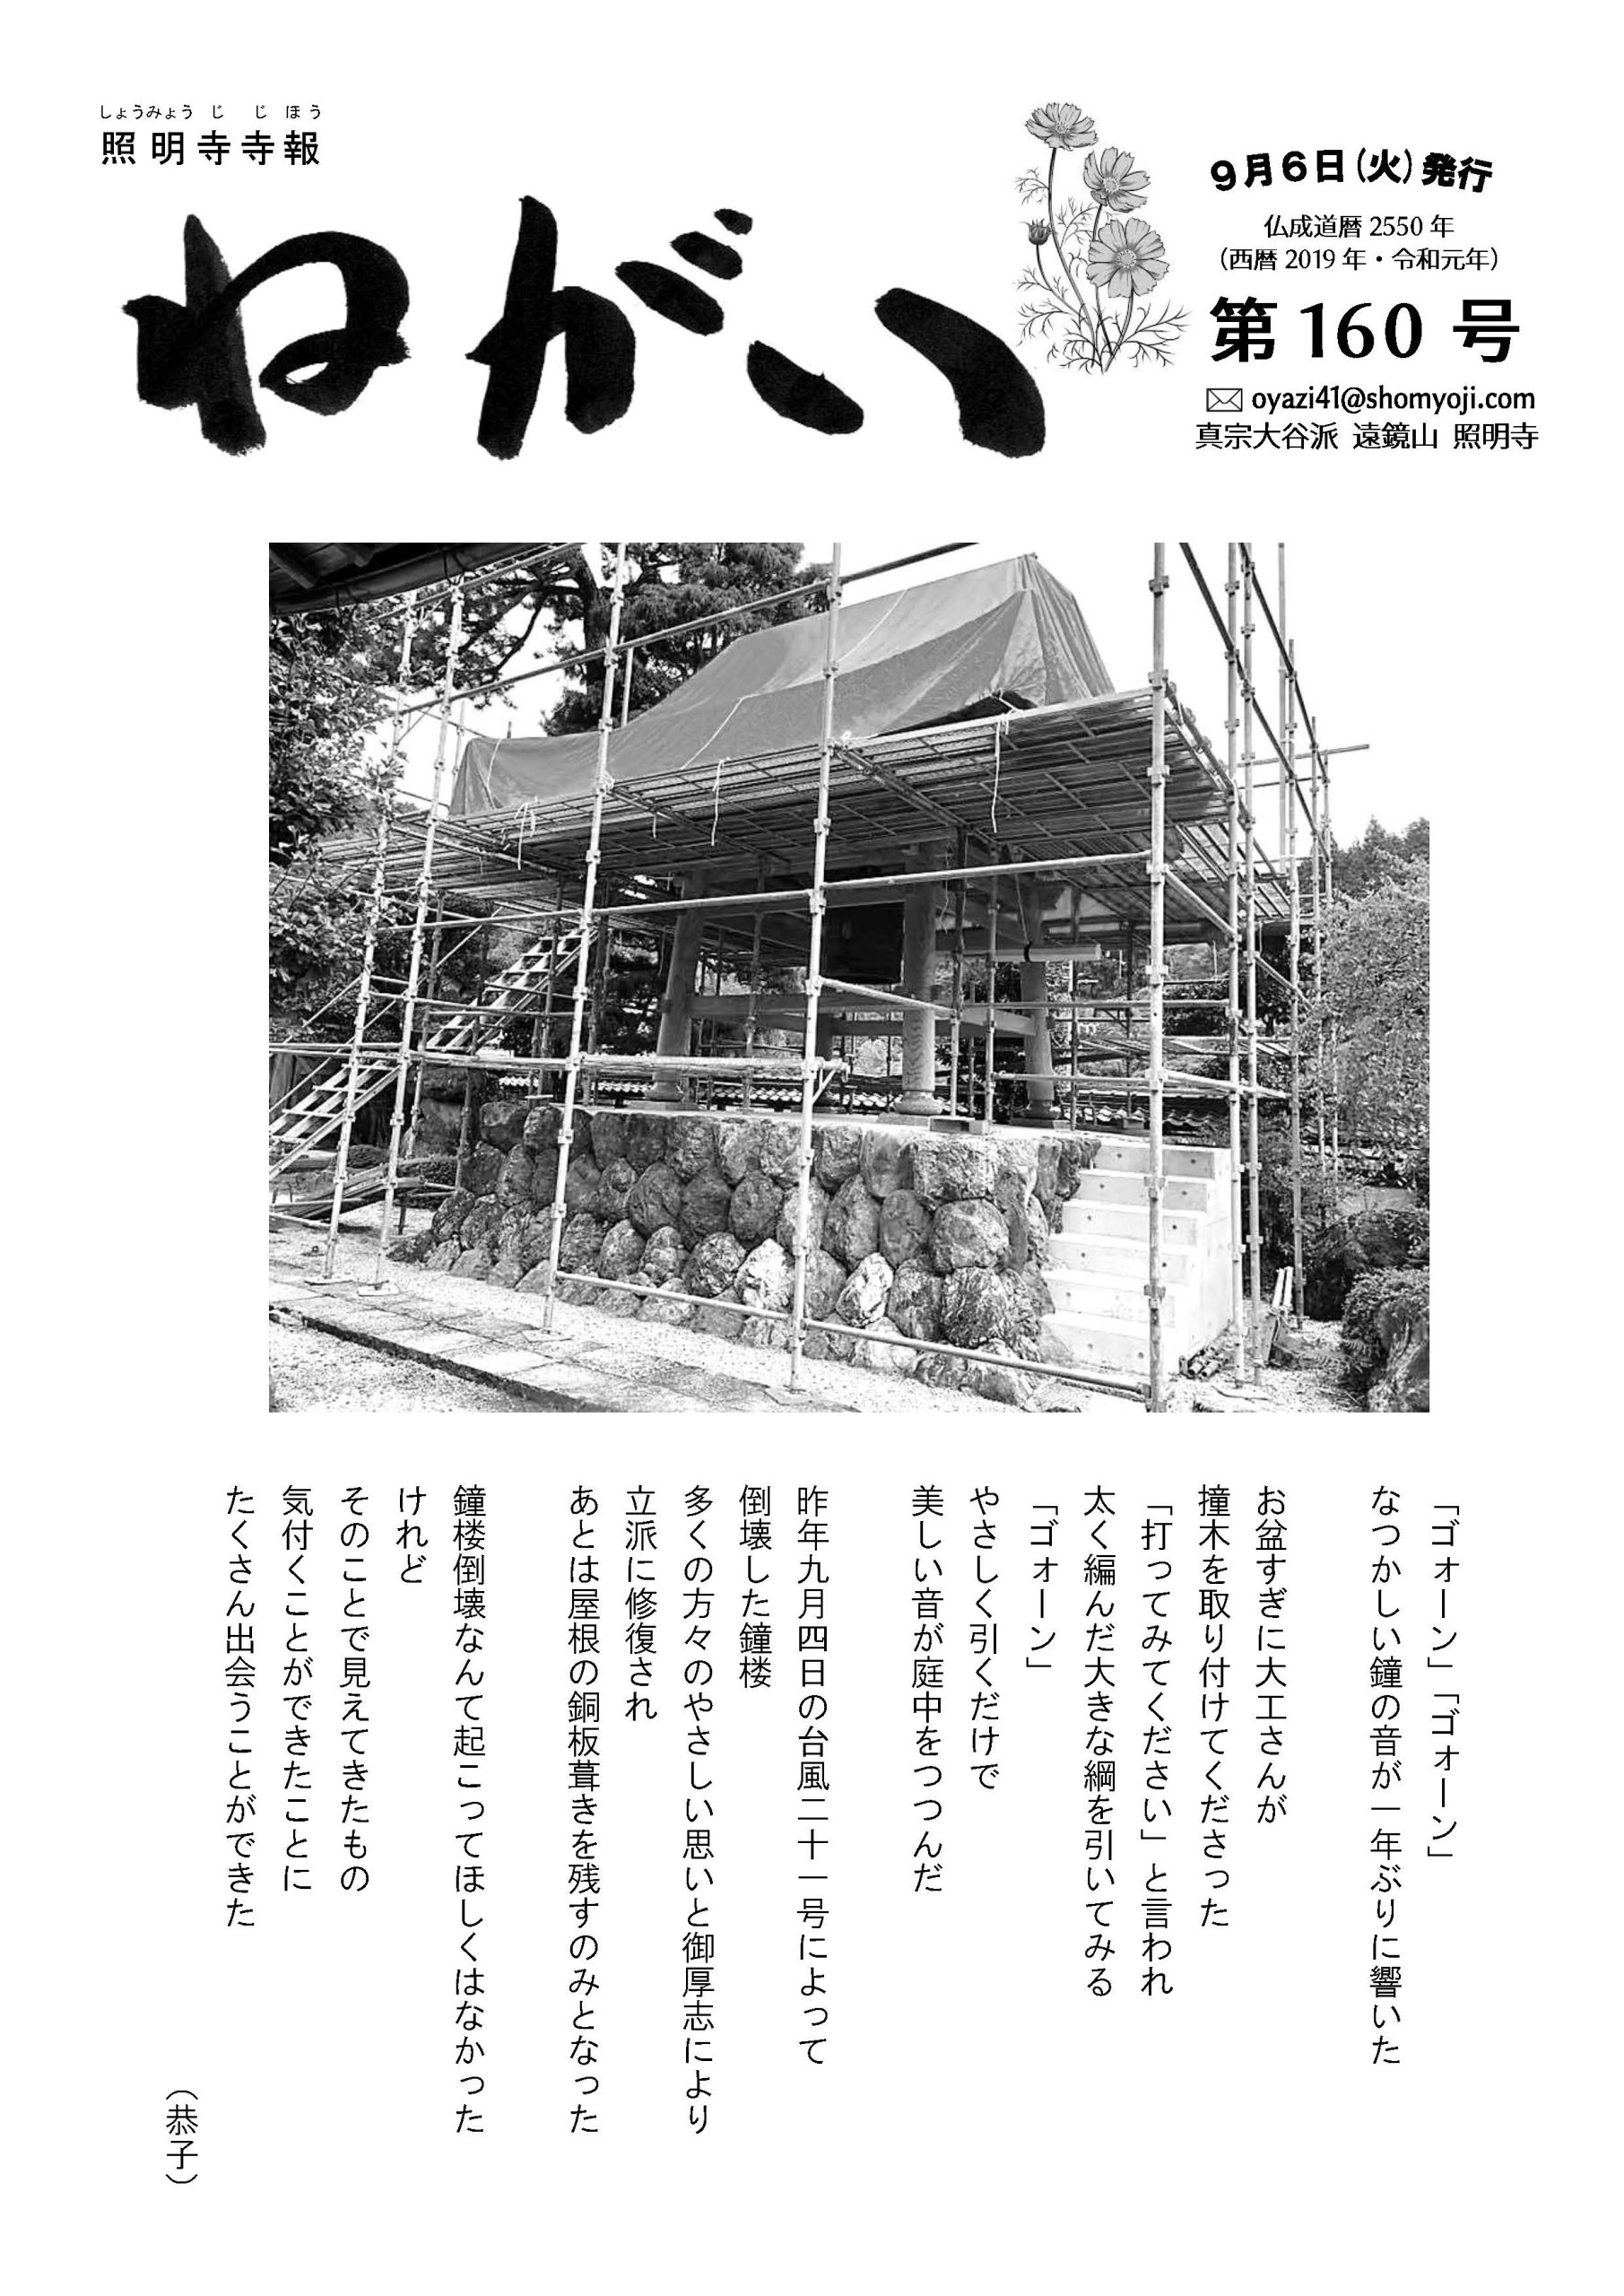 寺報「願い」 第160号 2019年9月6日発行